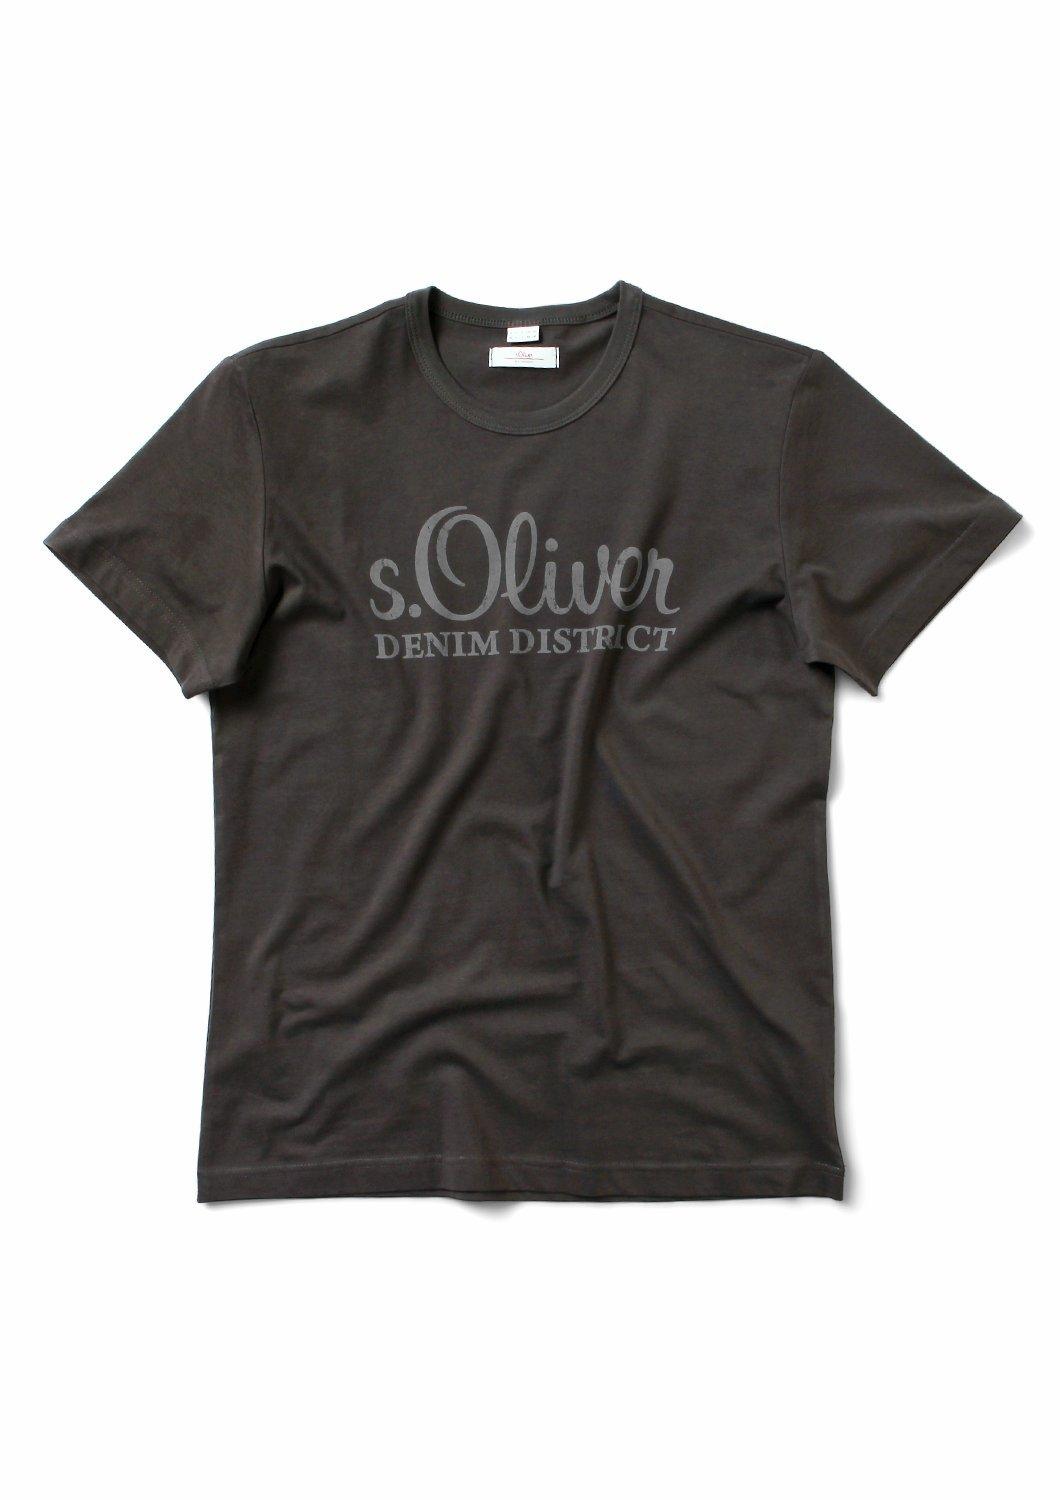 oliver shirts